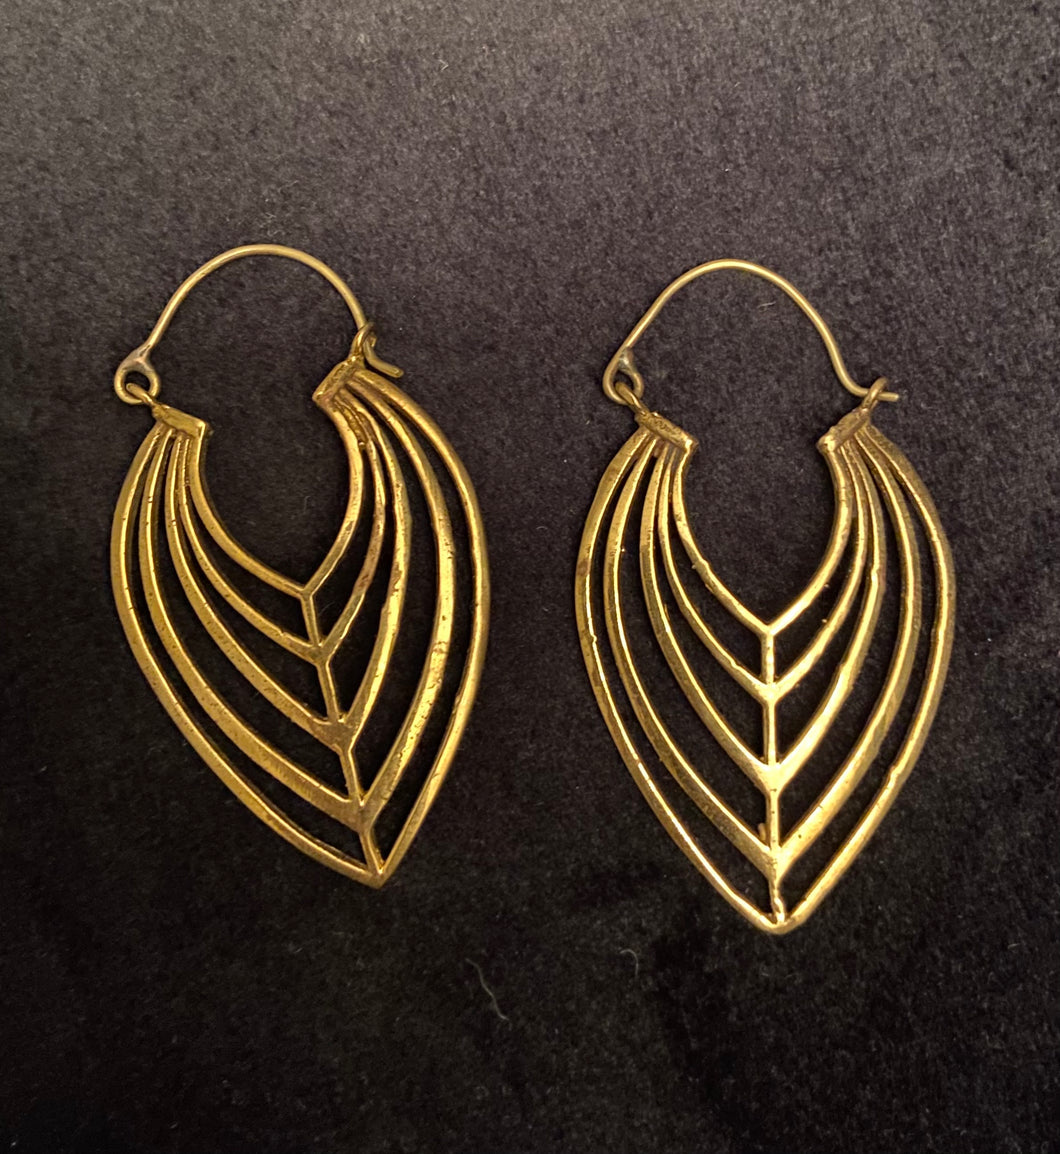 Vintage gold dangle earrings